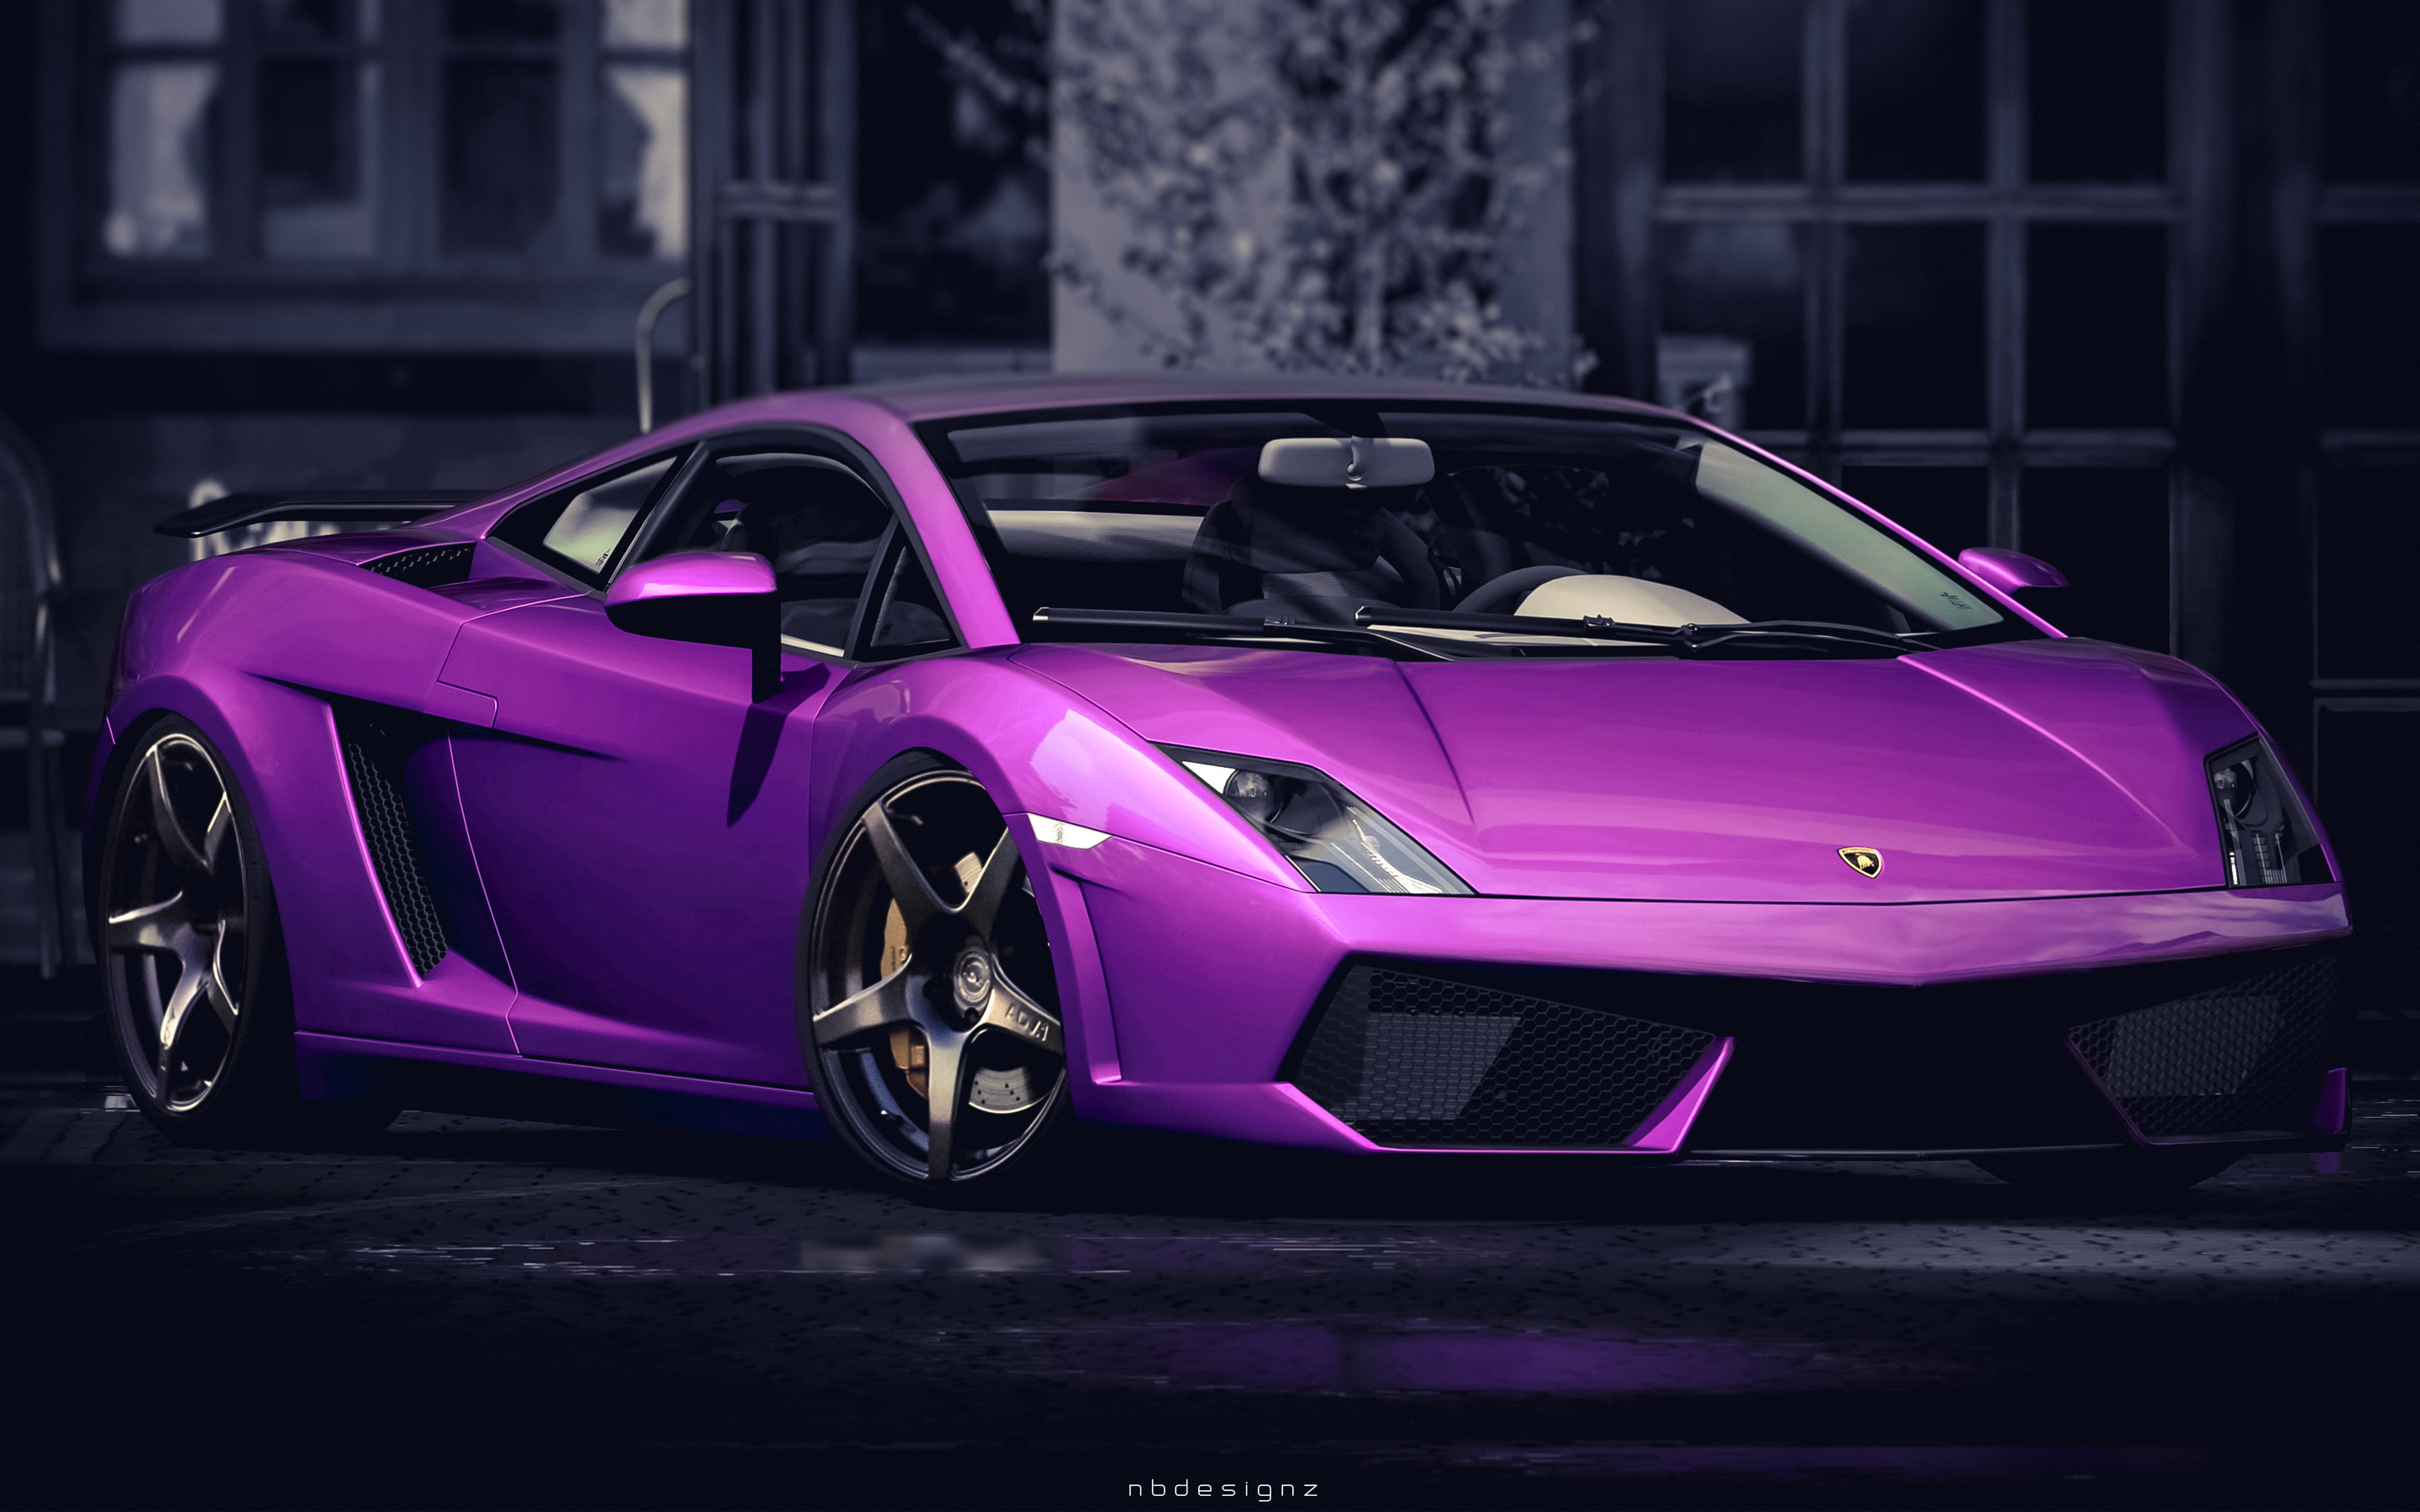 2880x1800 Purple Lamborghini Gallardo WallPaper HD - http://imashon.com/w/